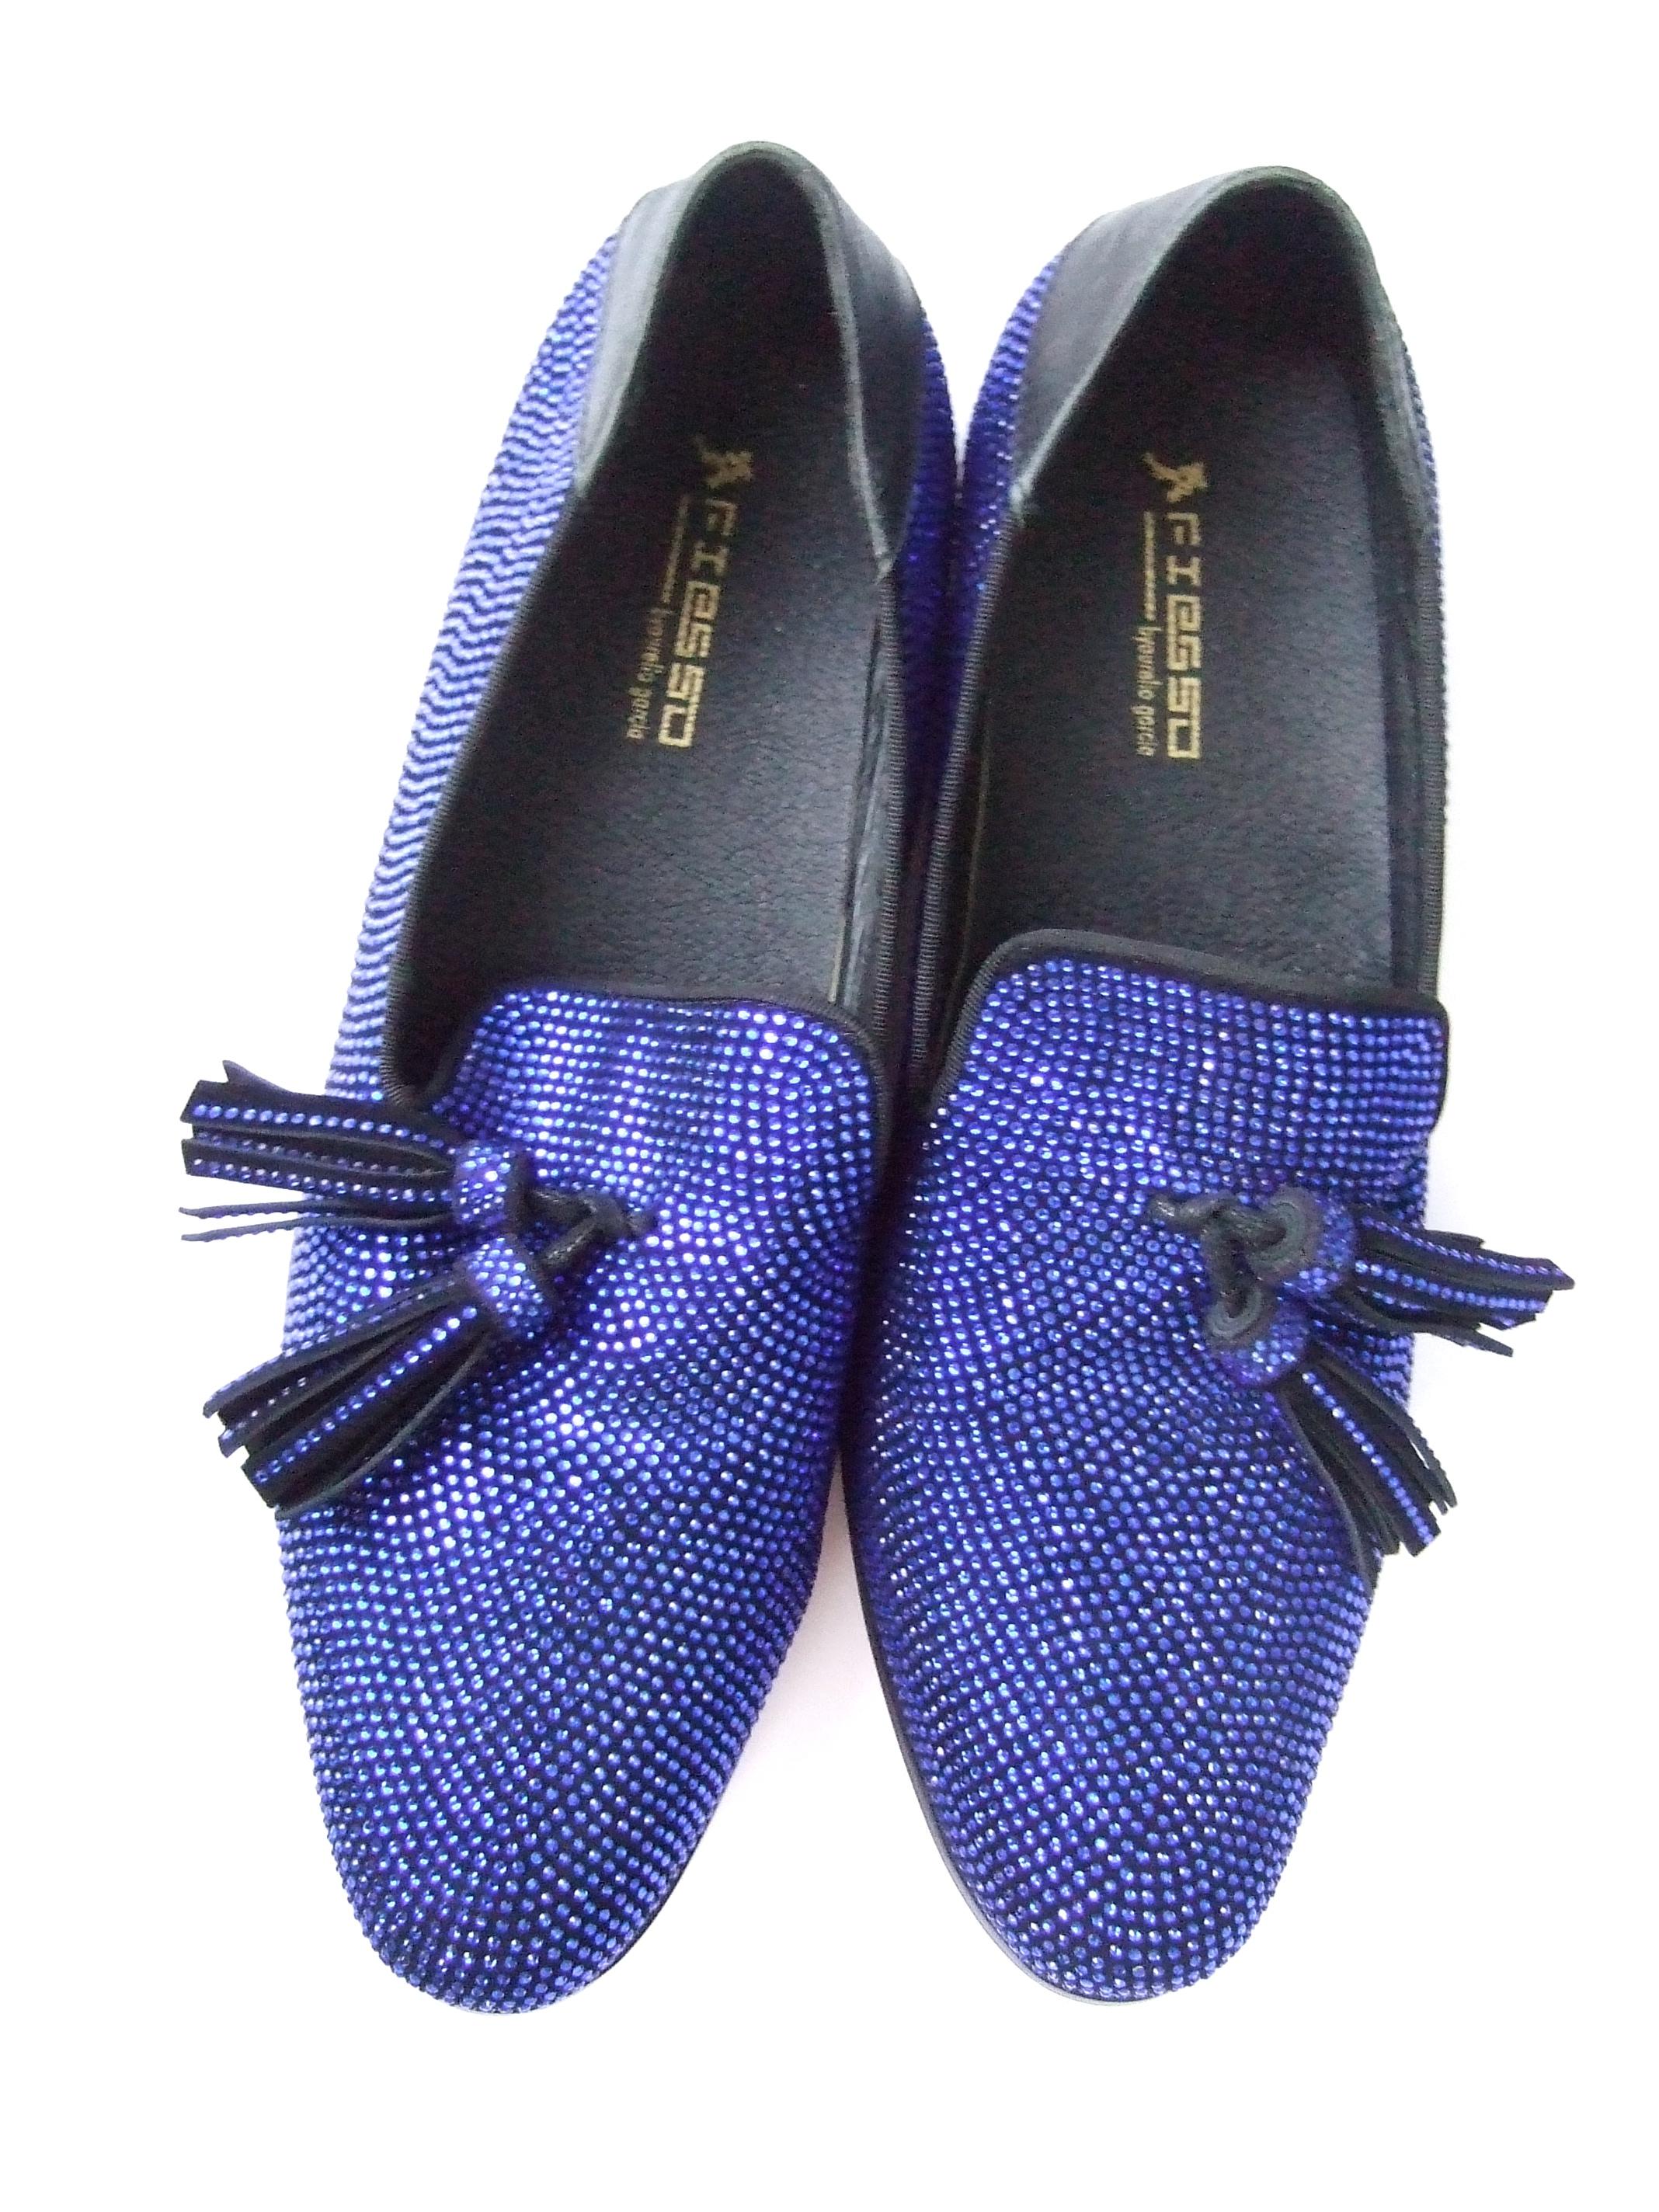 cobalt blue dress shoes